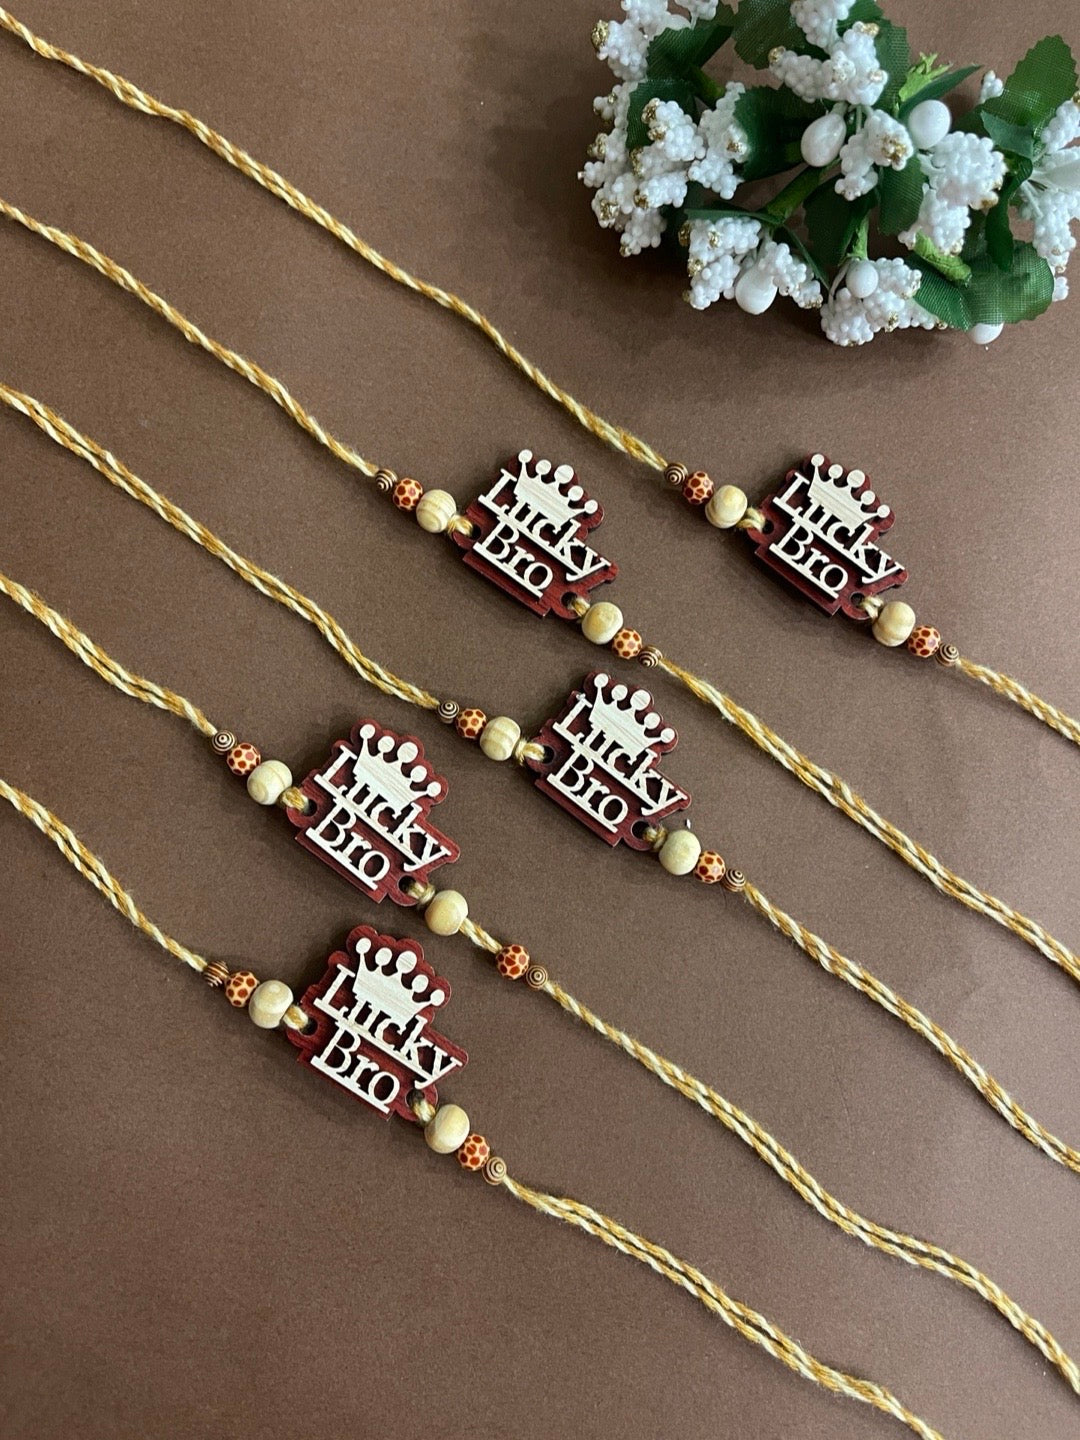 image for (Combo of 5) Unique Lucky Bro MDF Wooden Rakhi With Beads multicolour Thread Rakhi For Raksha Bandhan